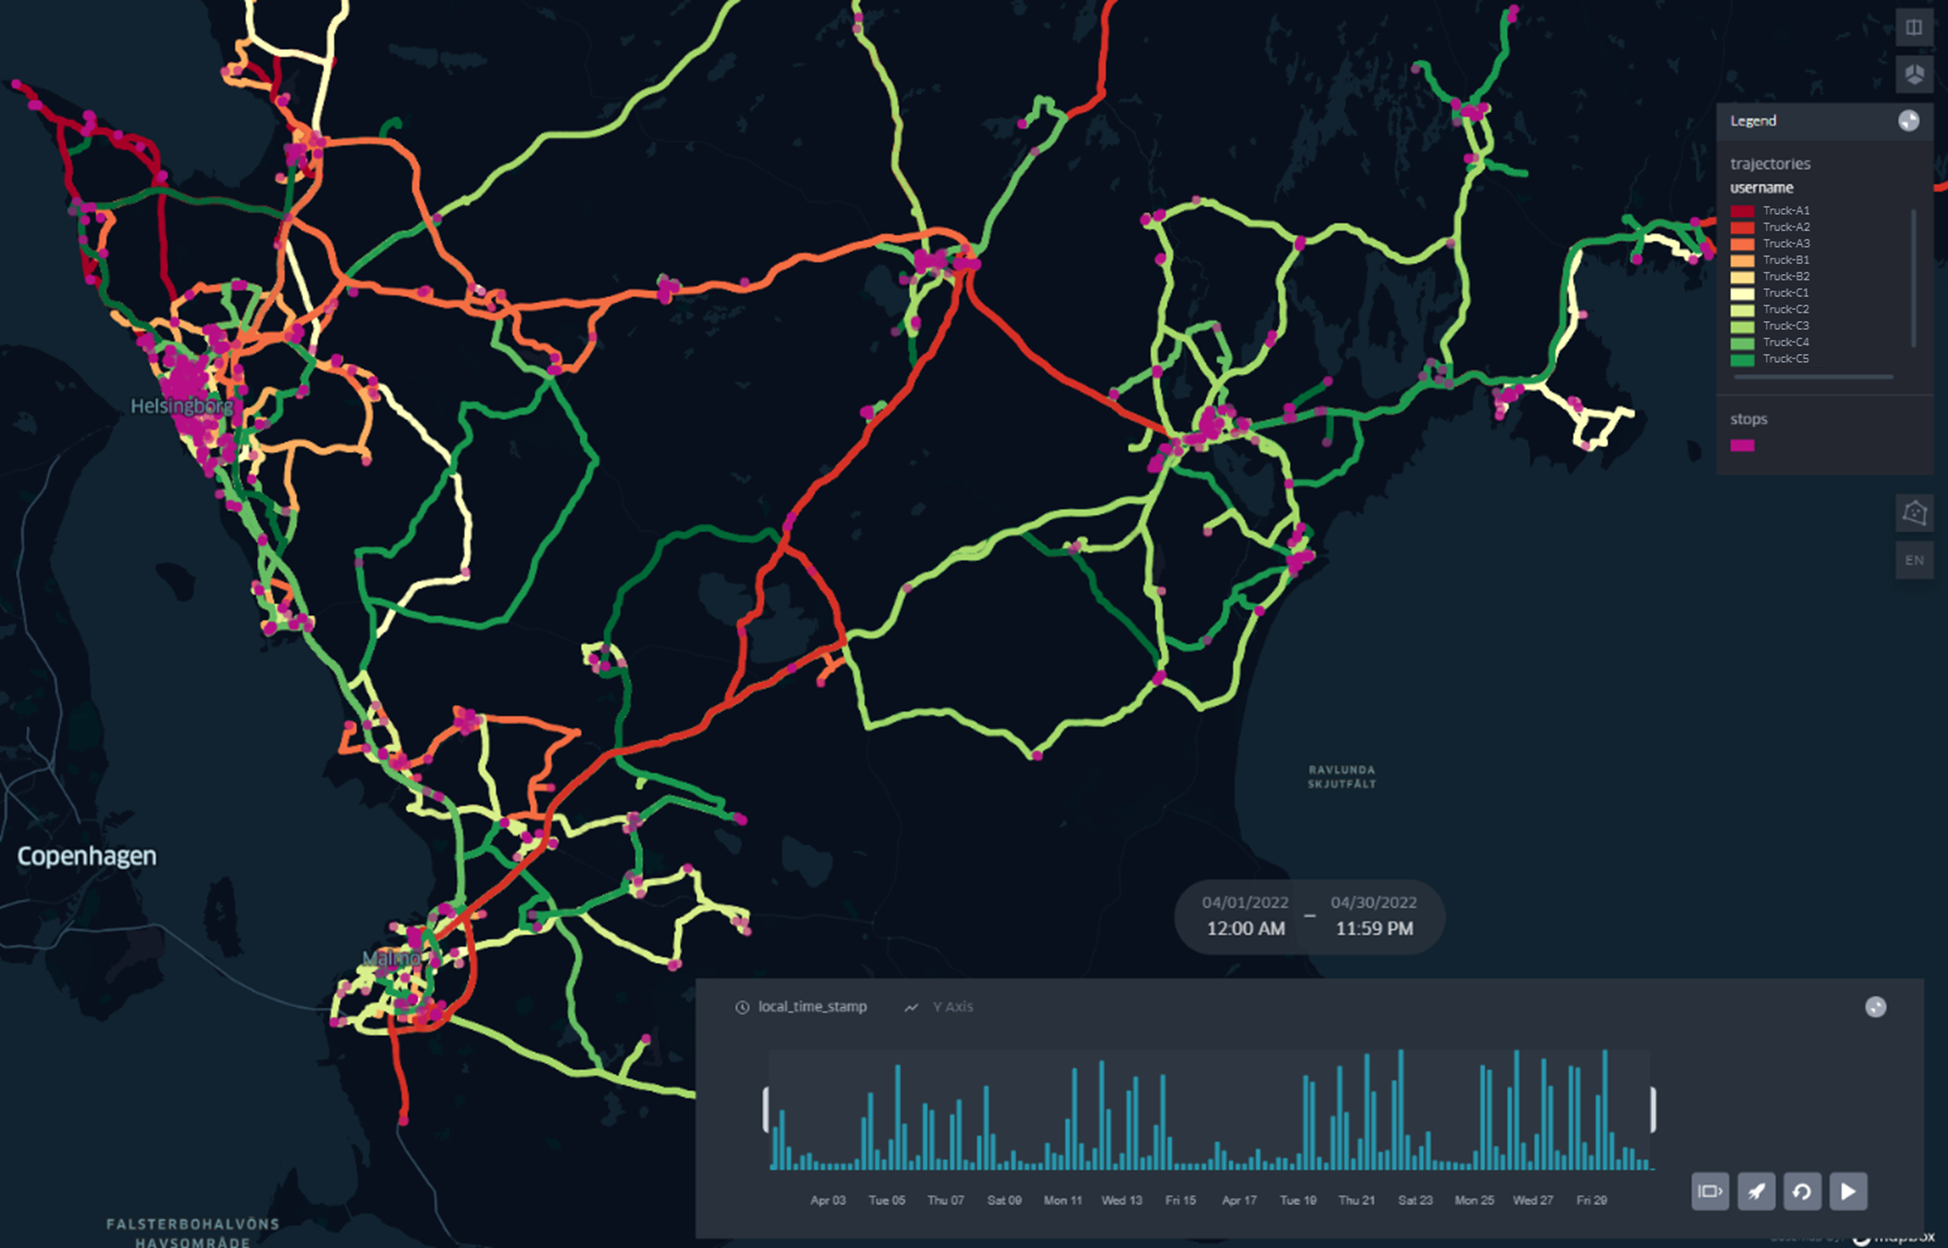 Analysis and visualization of transport data